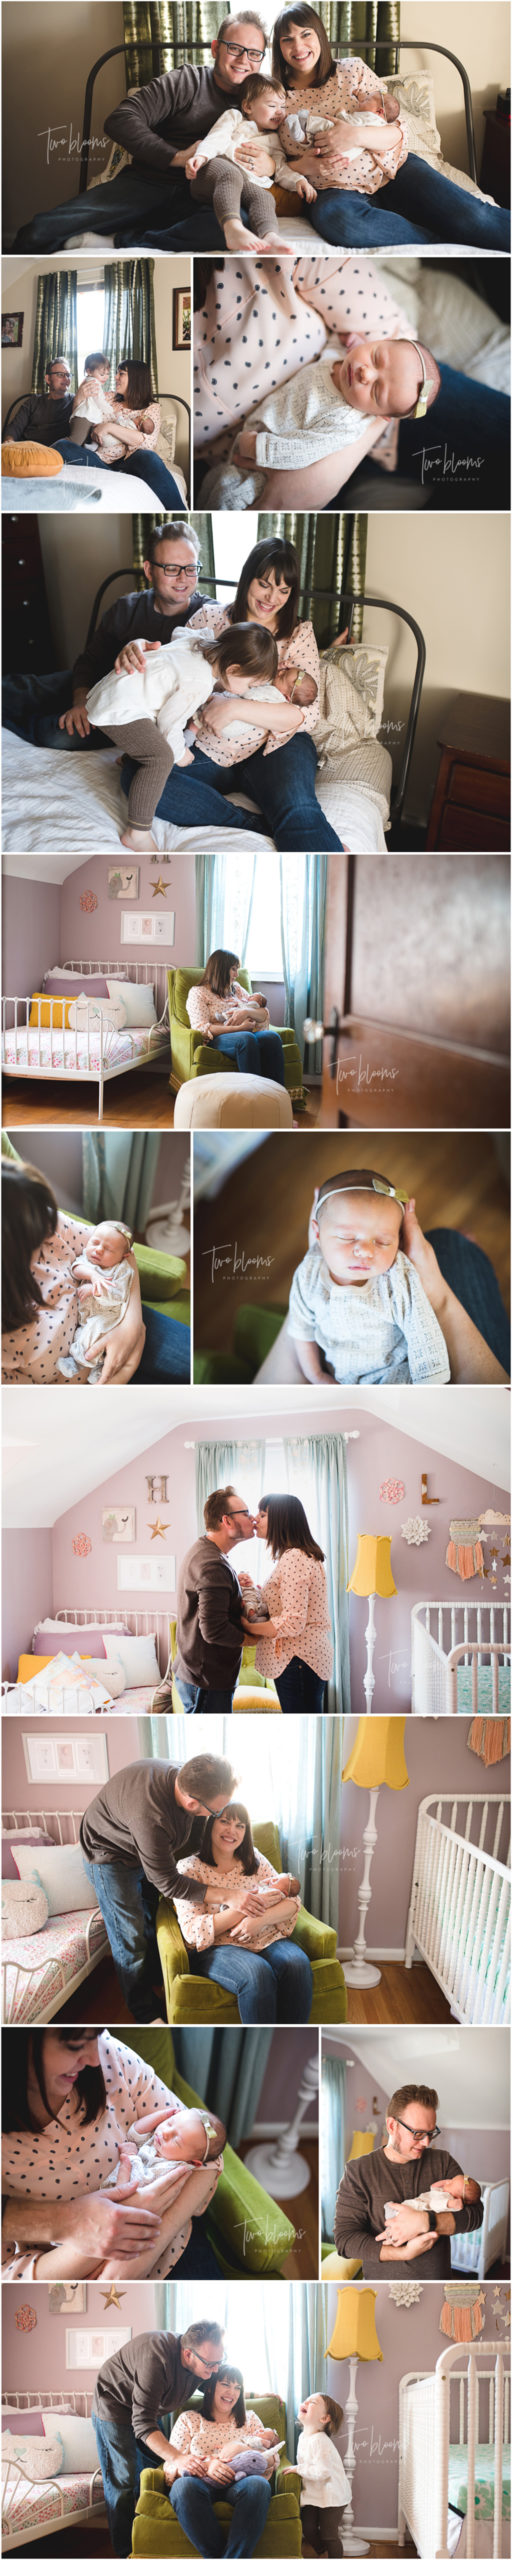 cincinnati-lifestyle-newborn-photographer_edited-1